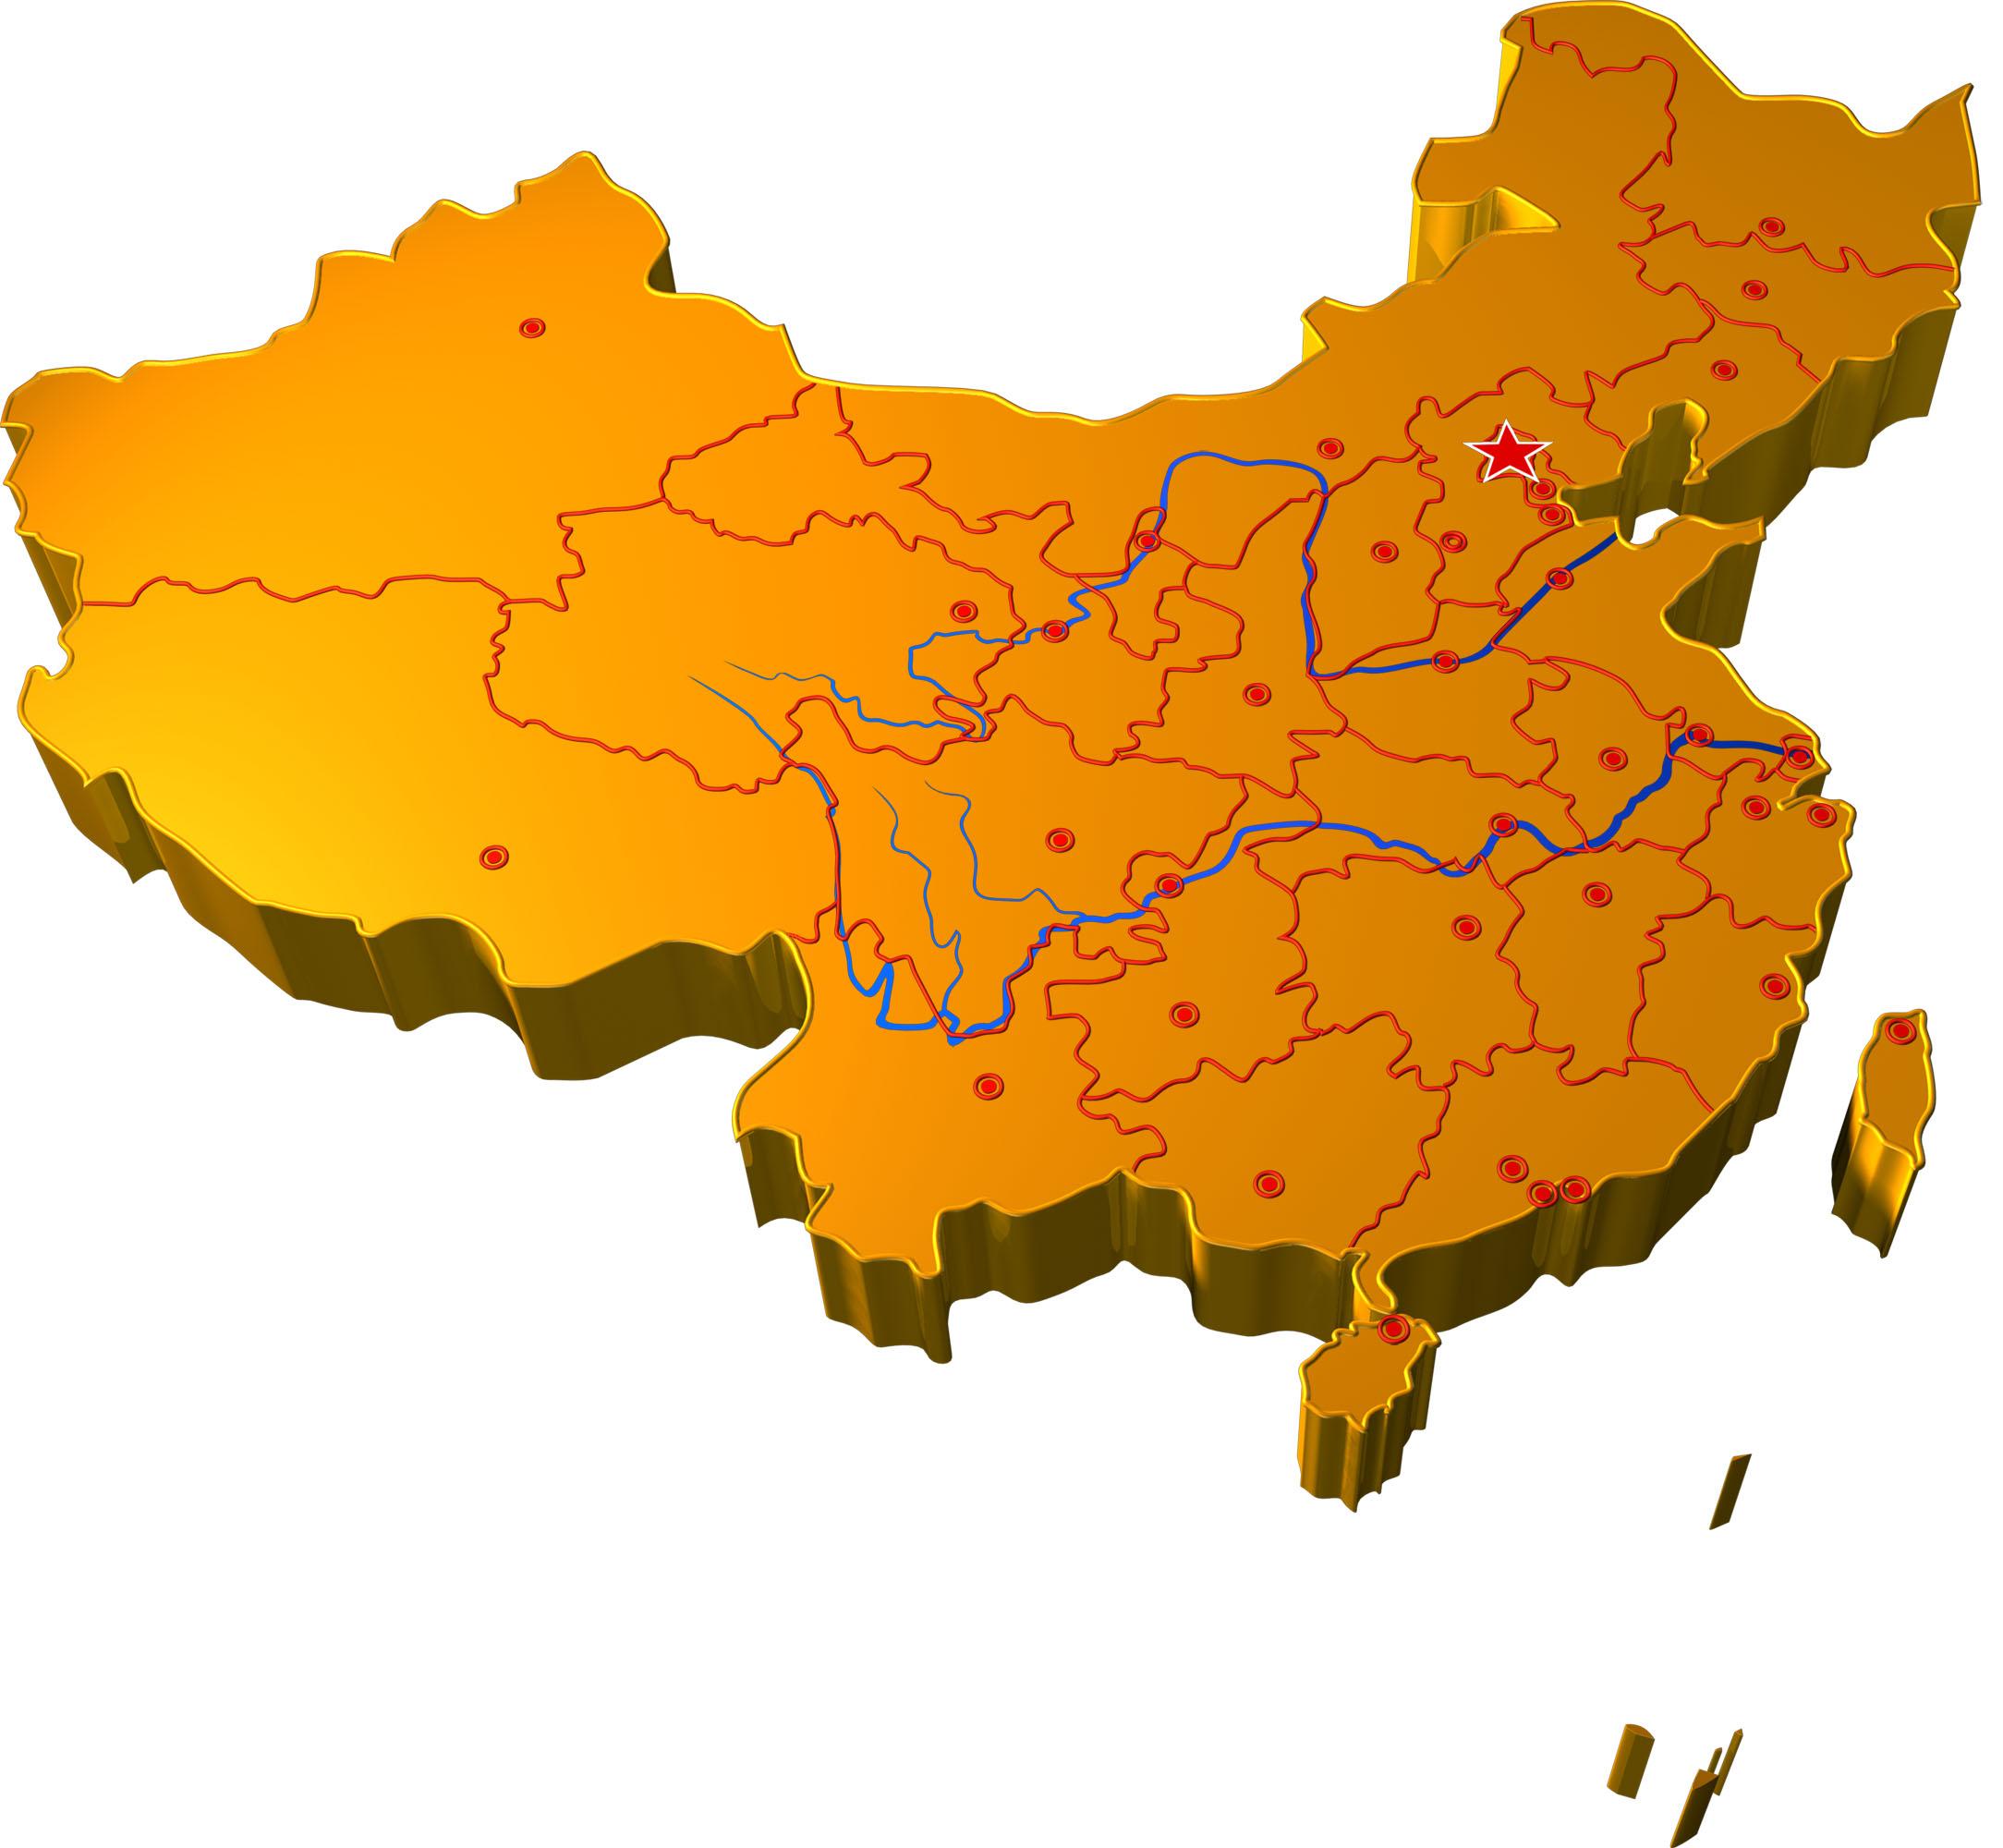 Map of china